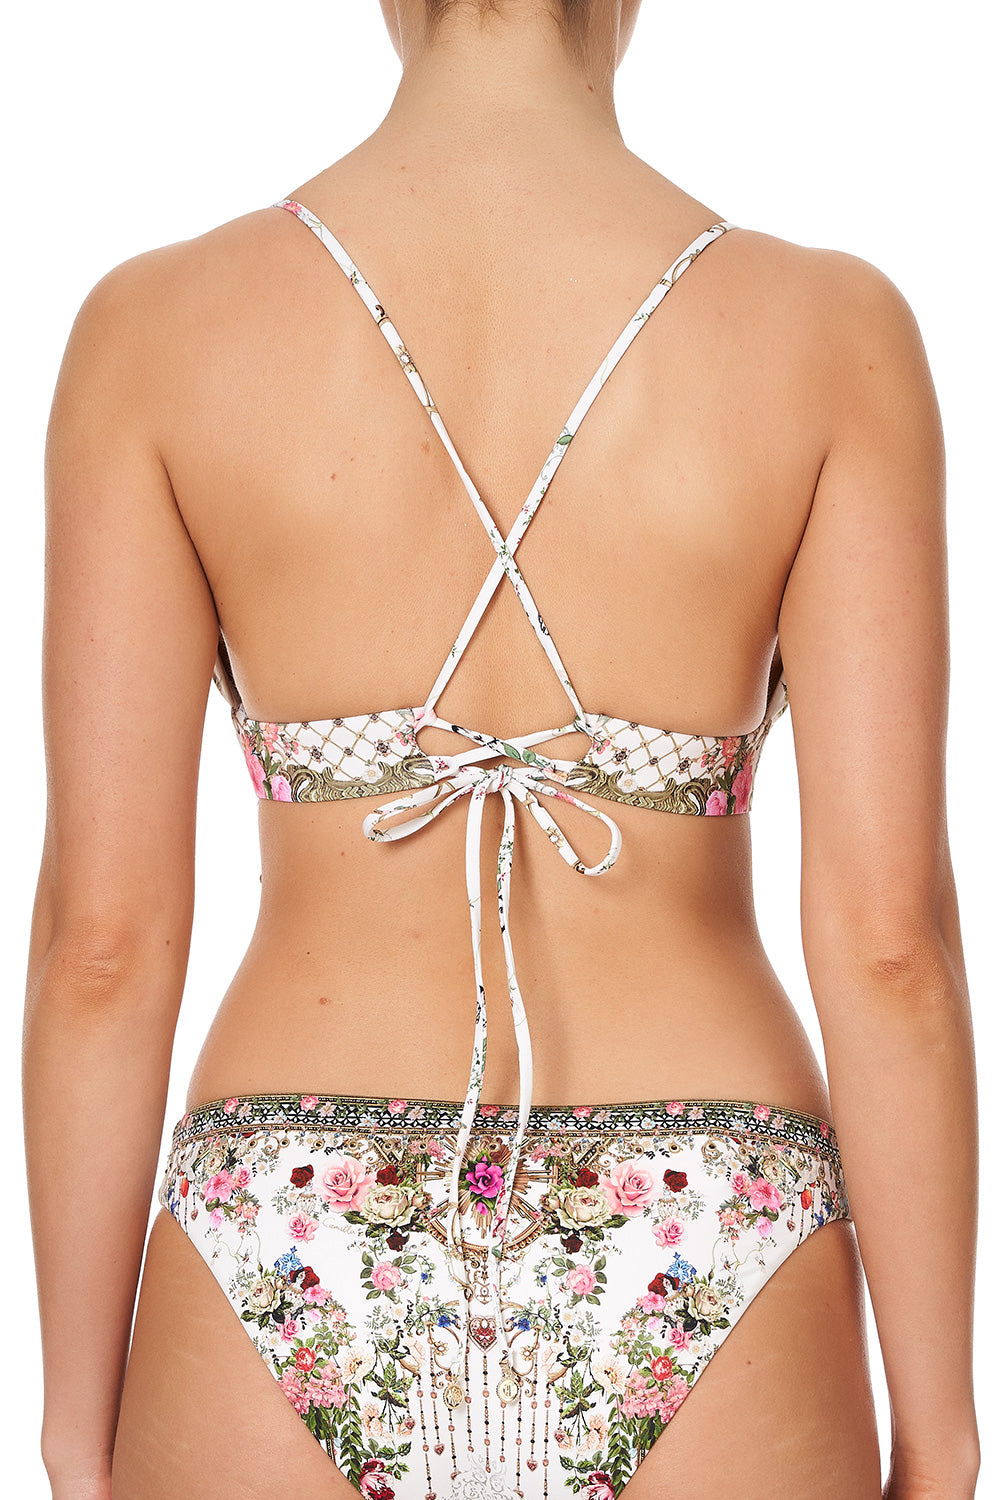 Camilla Swimwear Star Crossed Lovers Lace Back Tri Bra Bikini Top, C-D Cup